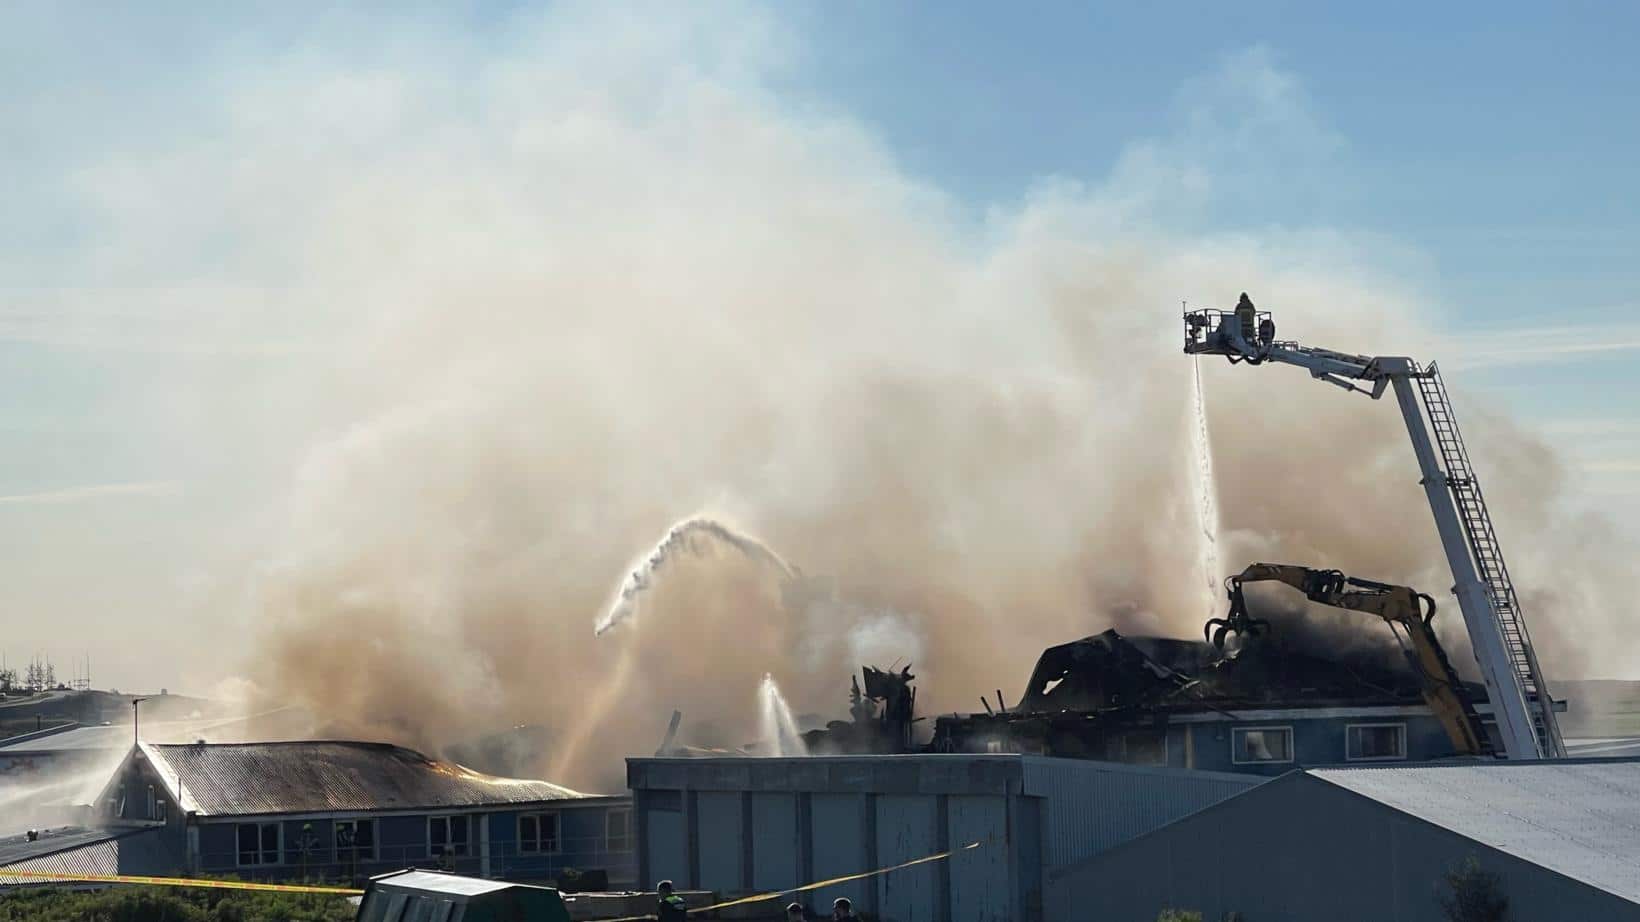 Fire in Hafnarfjörður Industrial Building Used for Housing